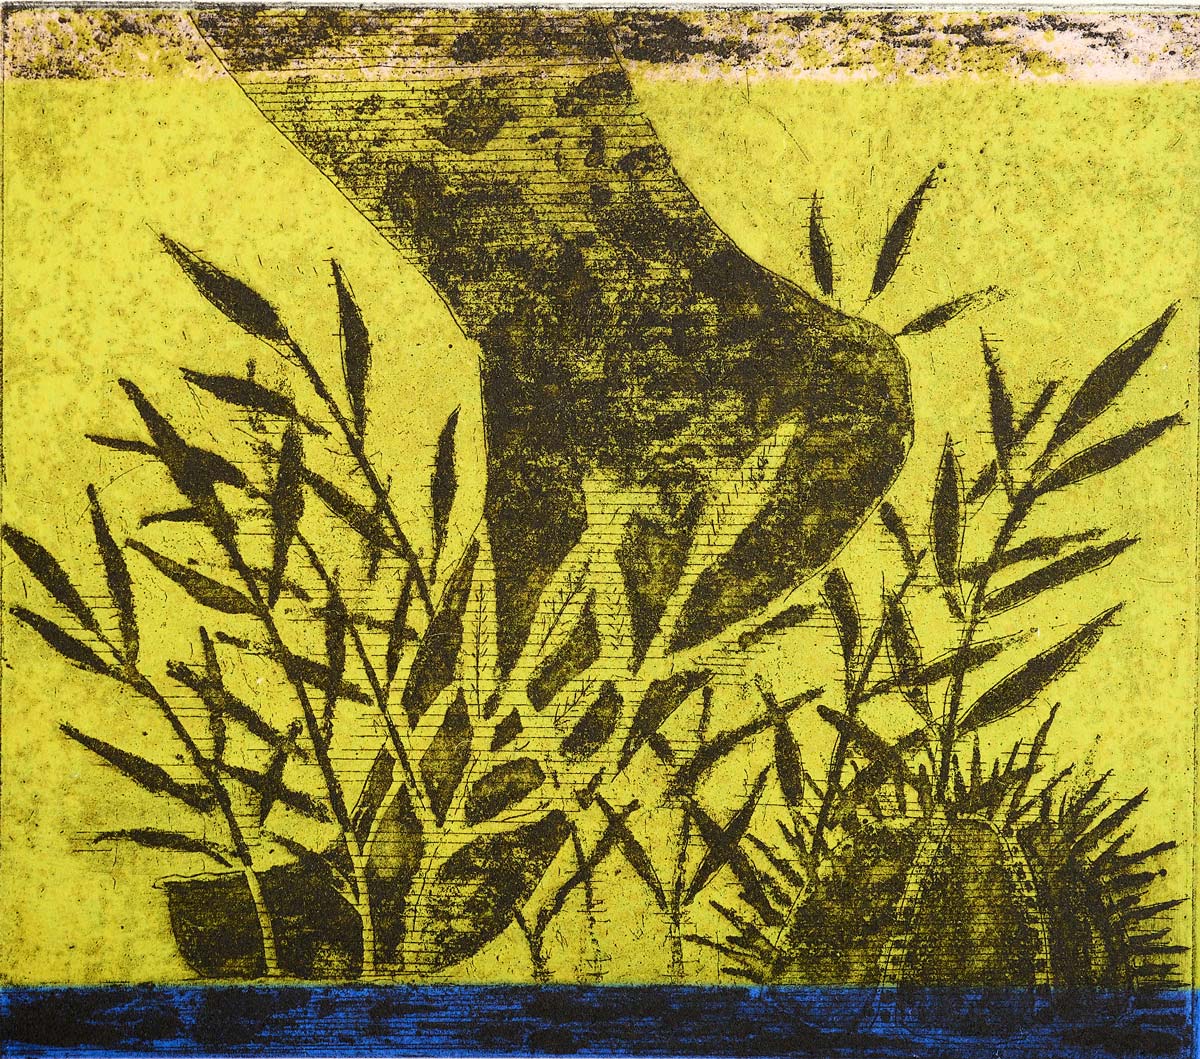 I Bite & Sting (Seaurchin), 26 x 27 cm, Colour Etching, 2020